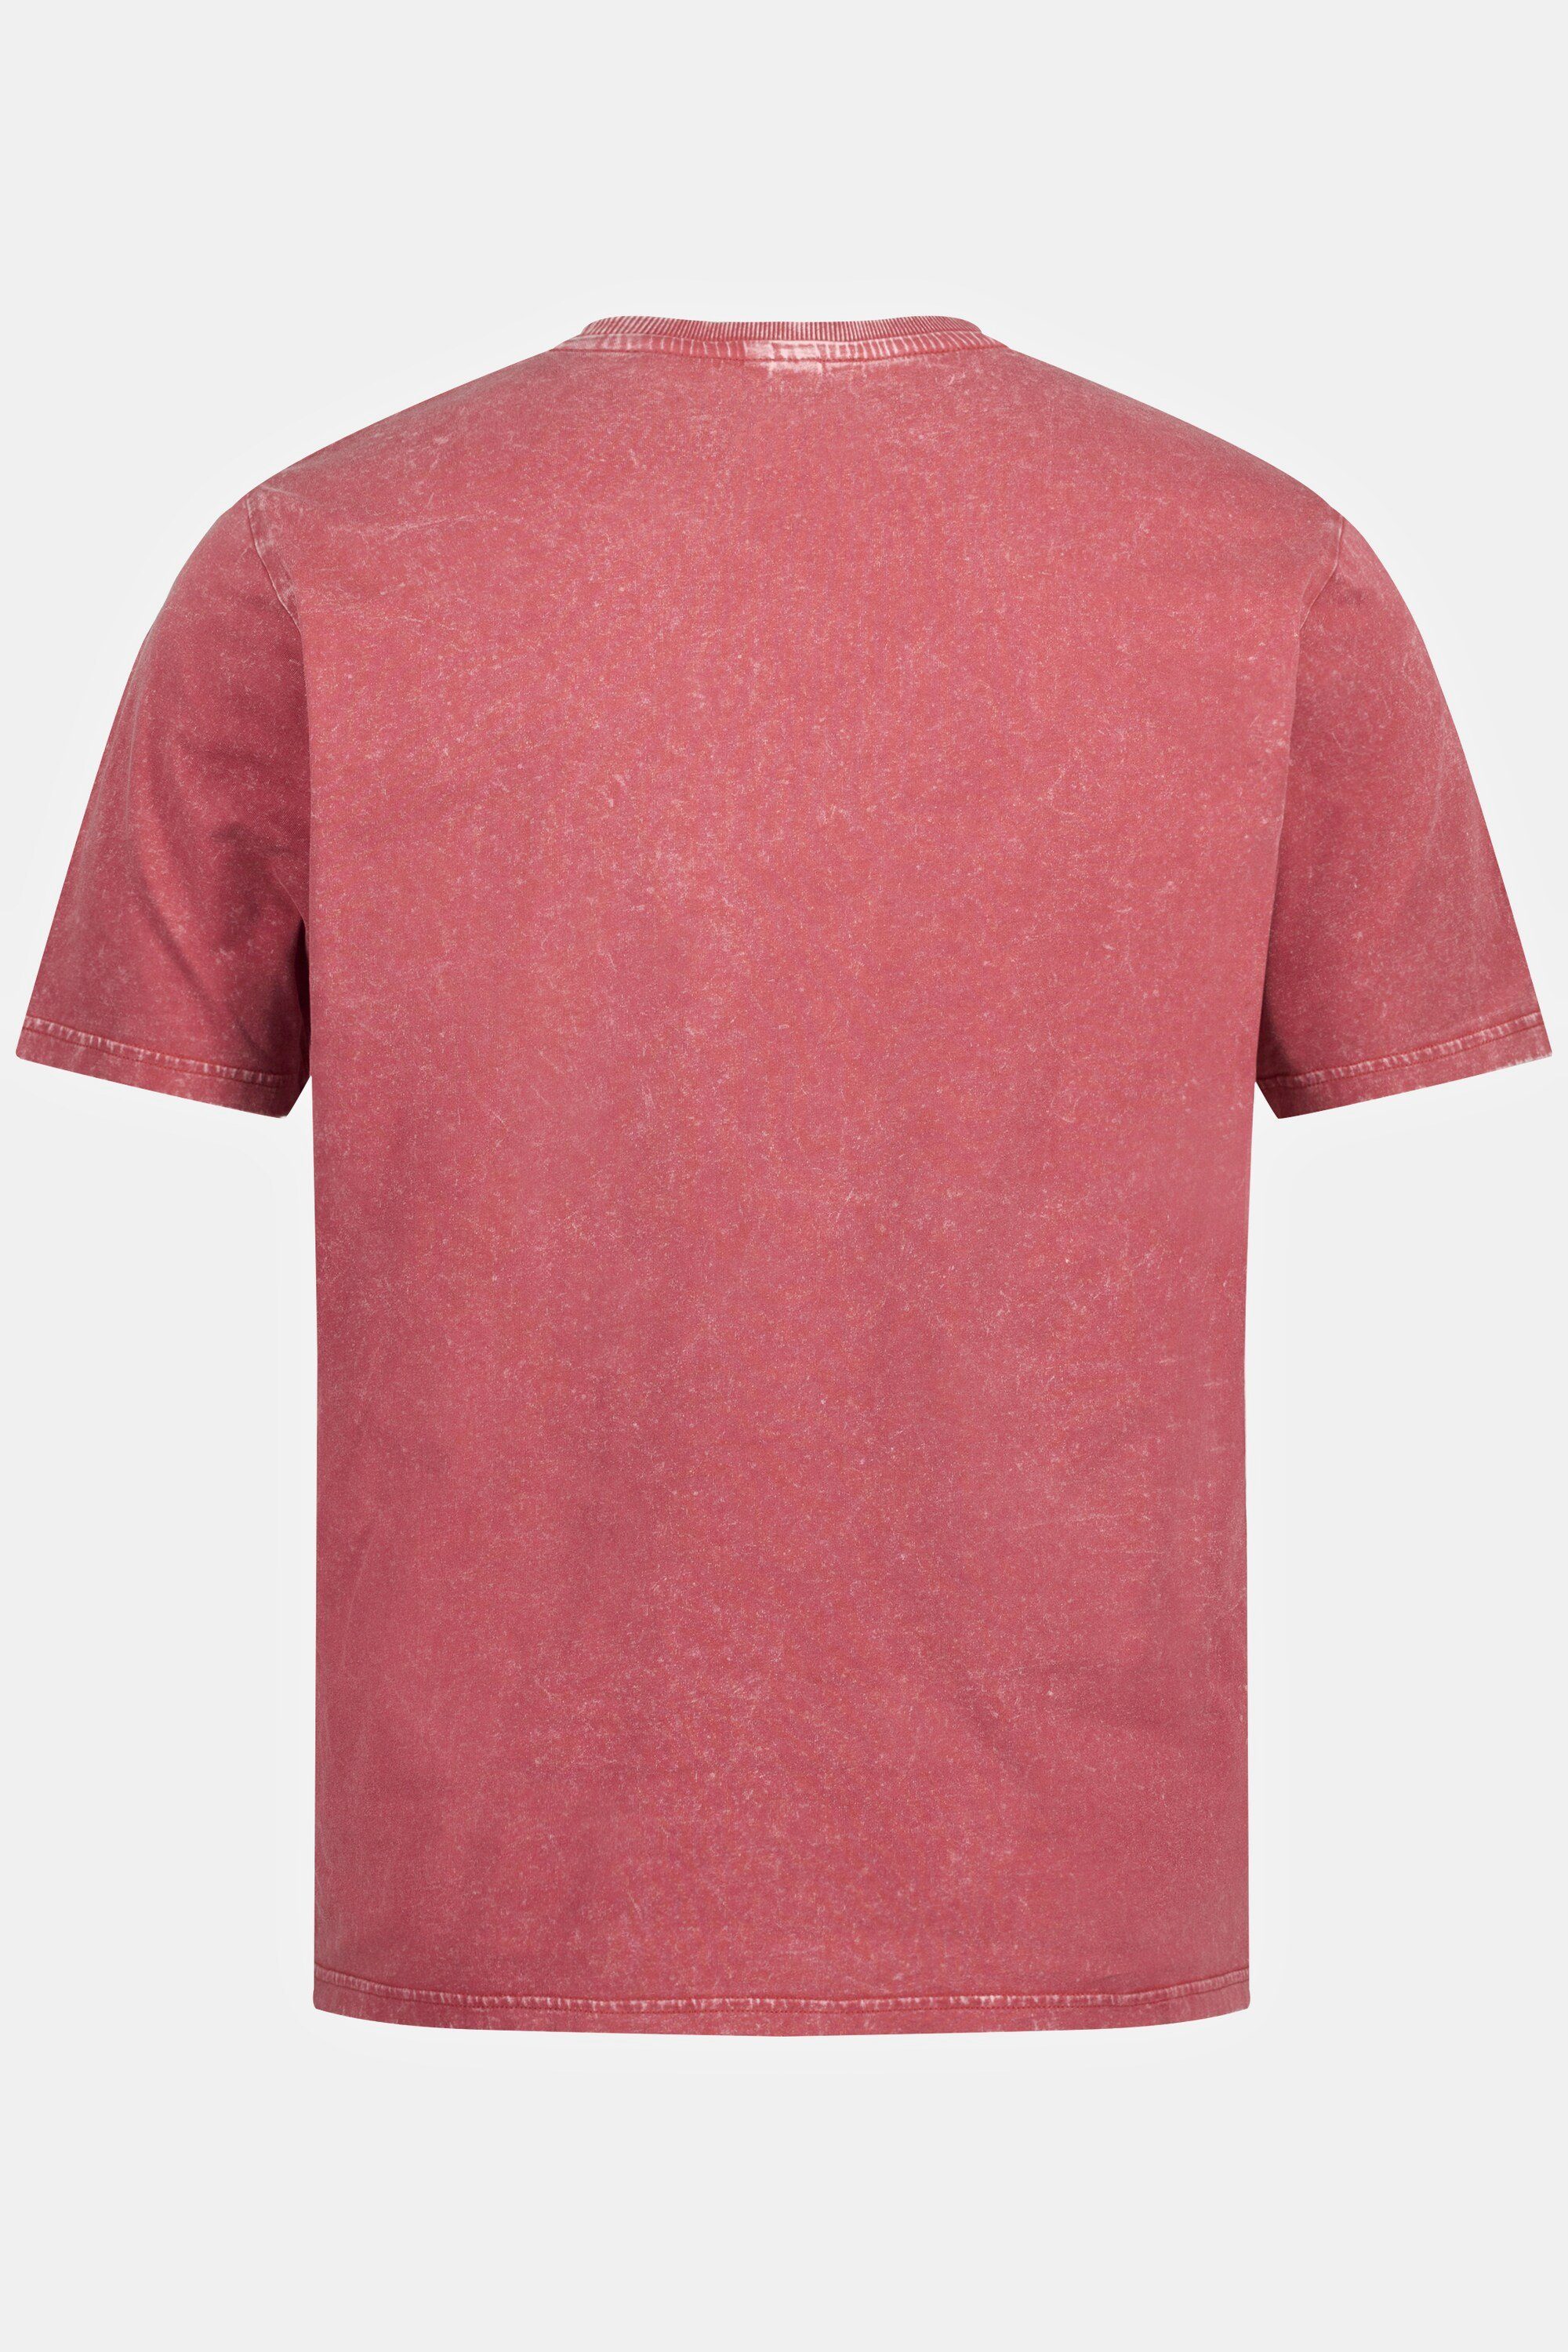 T-Shirt rot Rundhals Halbarm Print T-Shirt JP1880